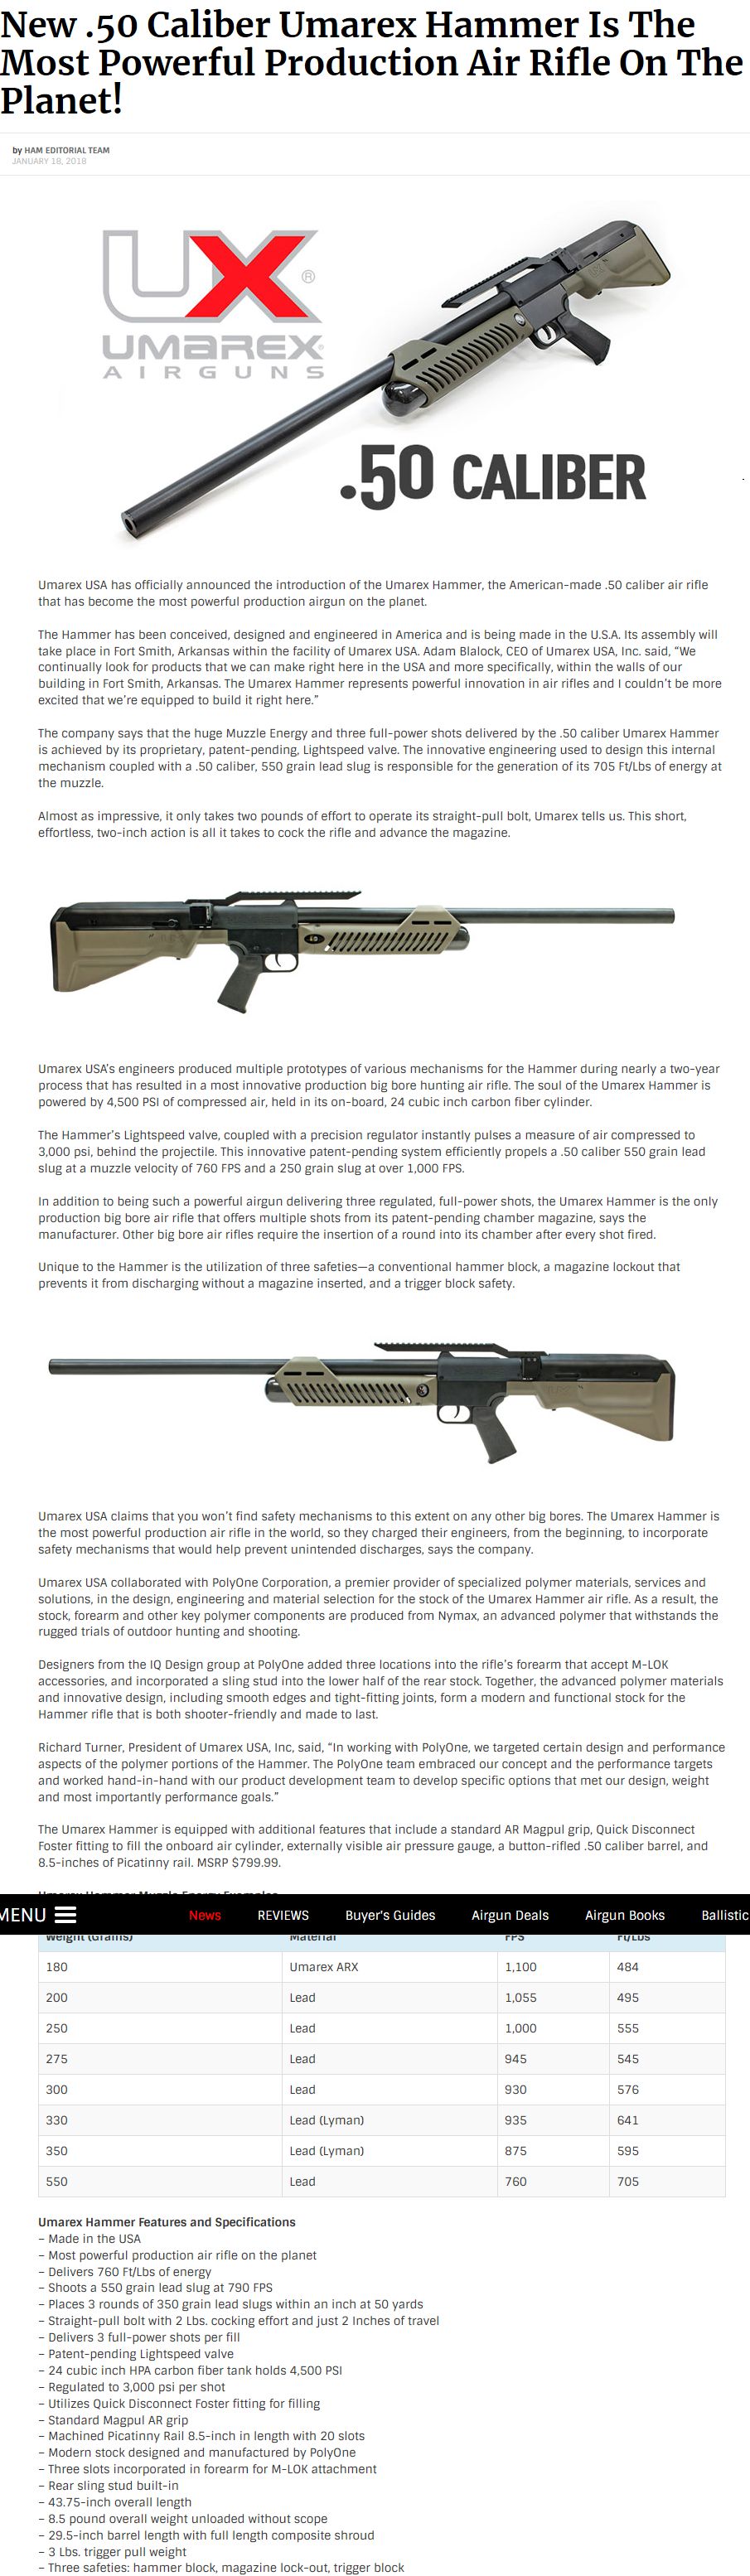 Screenshot_2020-12-31 50 Caliber Umarex Hammer Is The Most Powerful Production Air Rifle.jpg